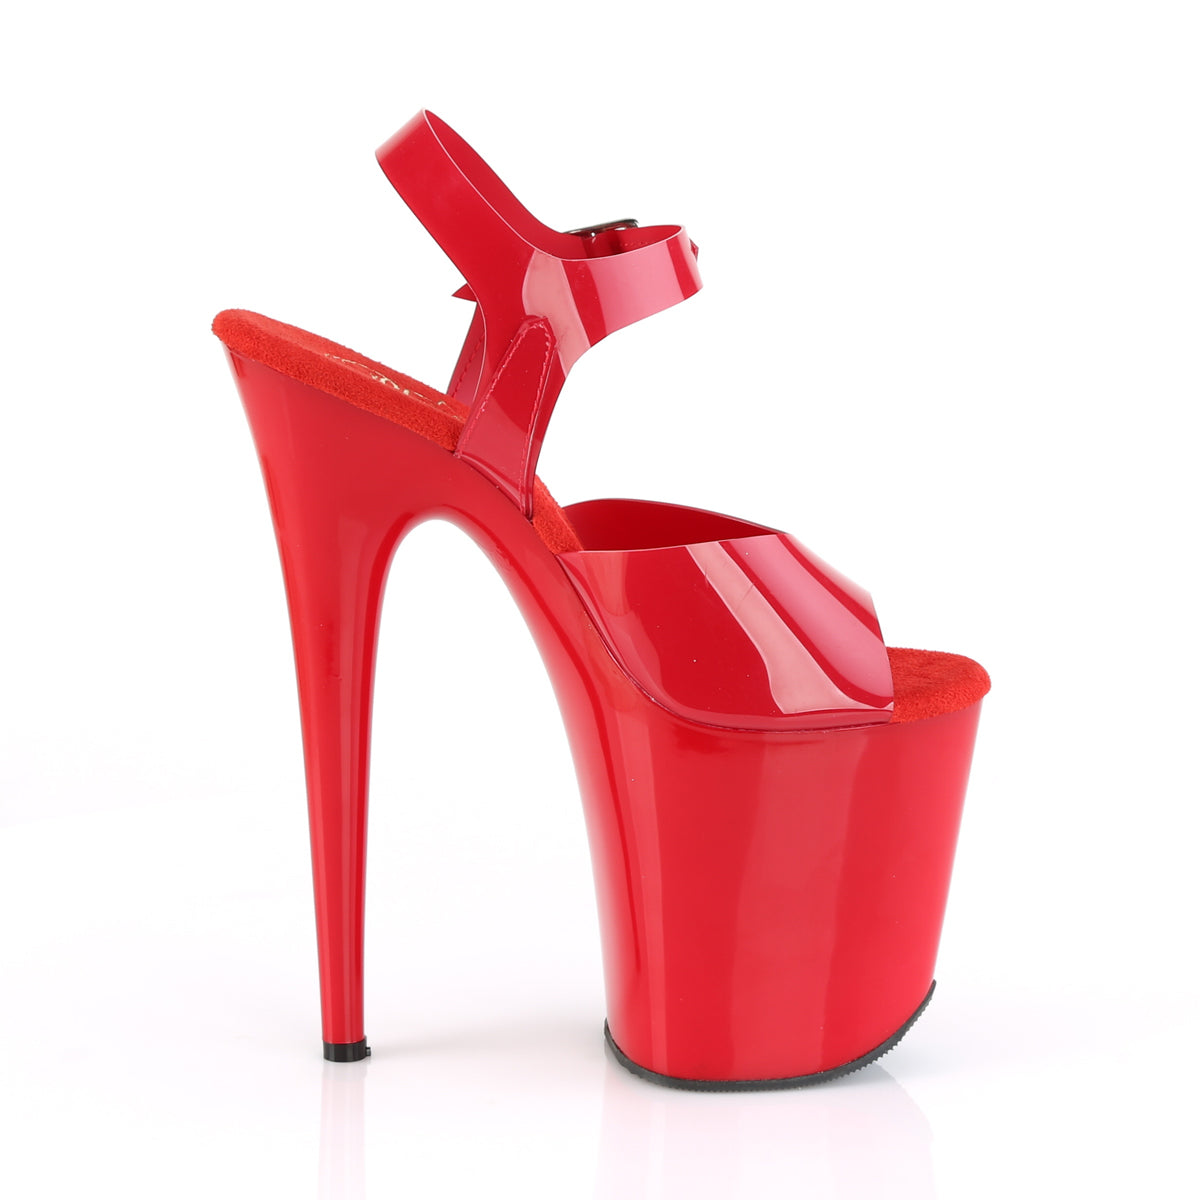 Pleaser Sandales pour femmes FLAMINGO-808n rouge rouge (gelée) TPU / rouge